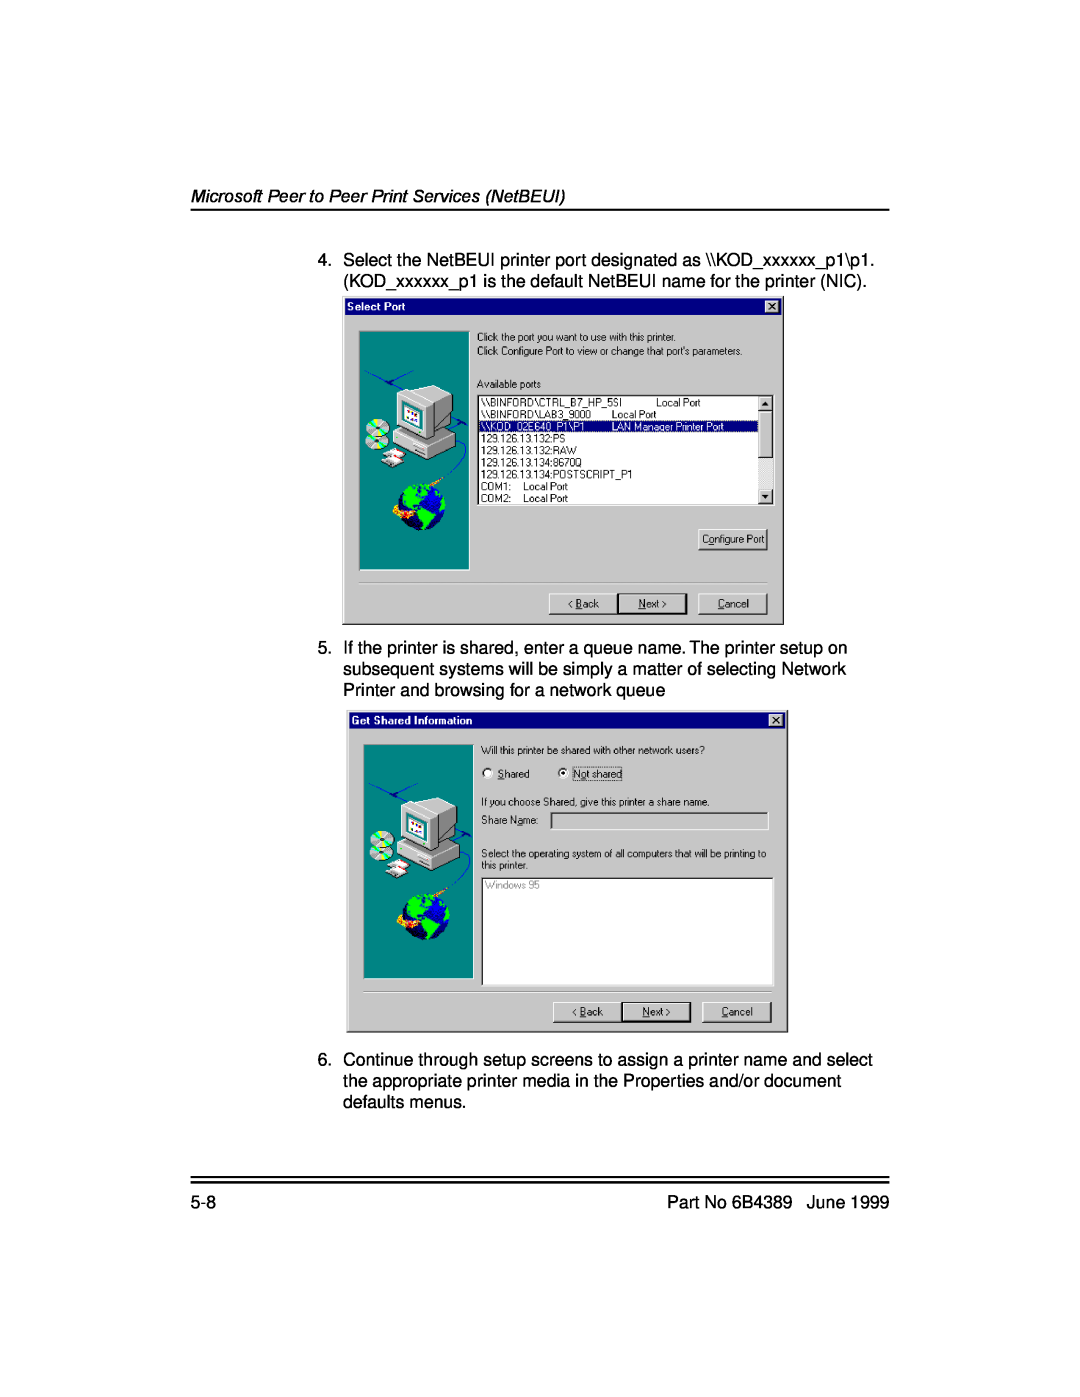 Kodak 8670, 8660 manual Microsoft Peer to Peer Print Services NetBEUI, Part No 6B4389 June 